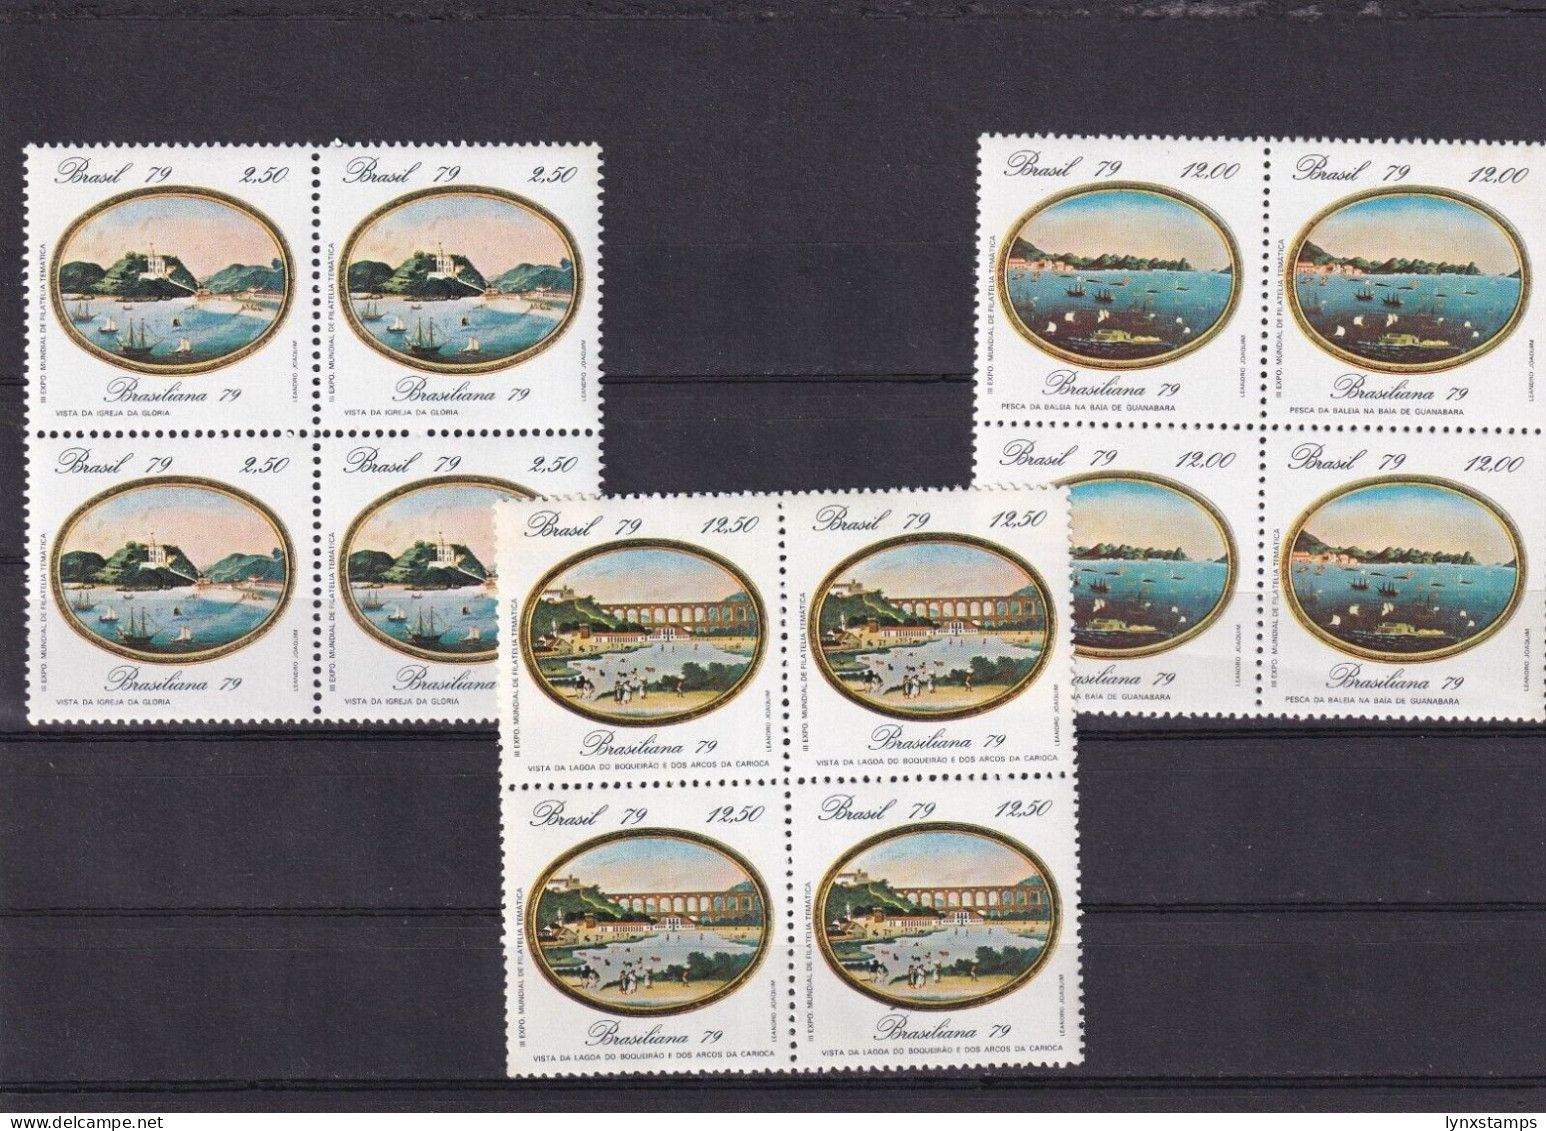 SA06 Brazil 1979 Third World Thematic Stamp Exhibition "Brasiliana 79" Blocks - Neufs